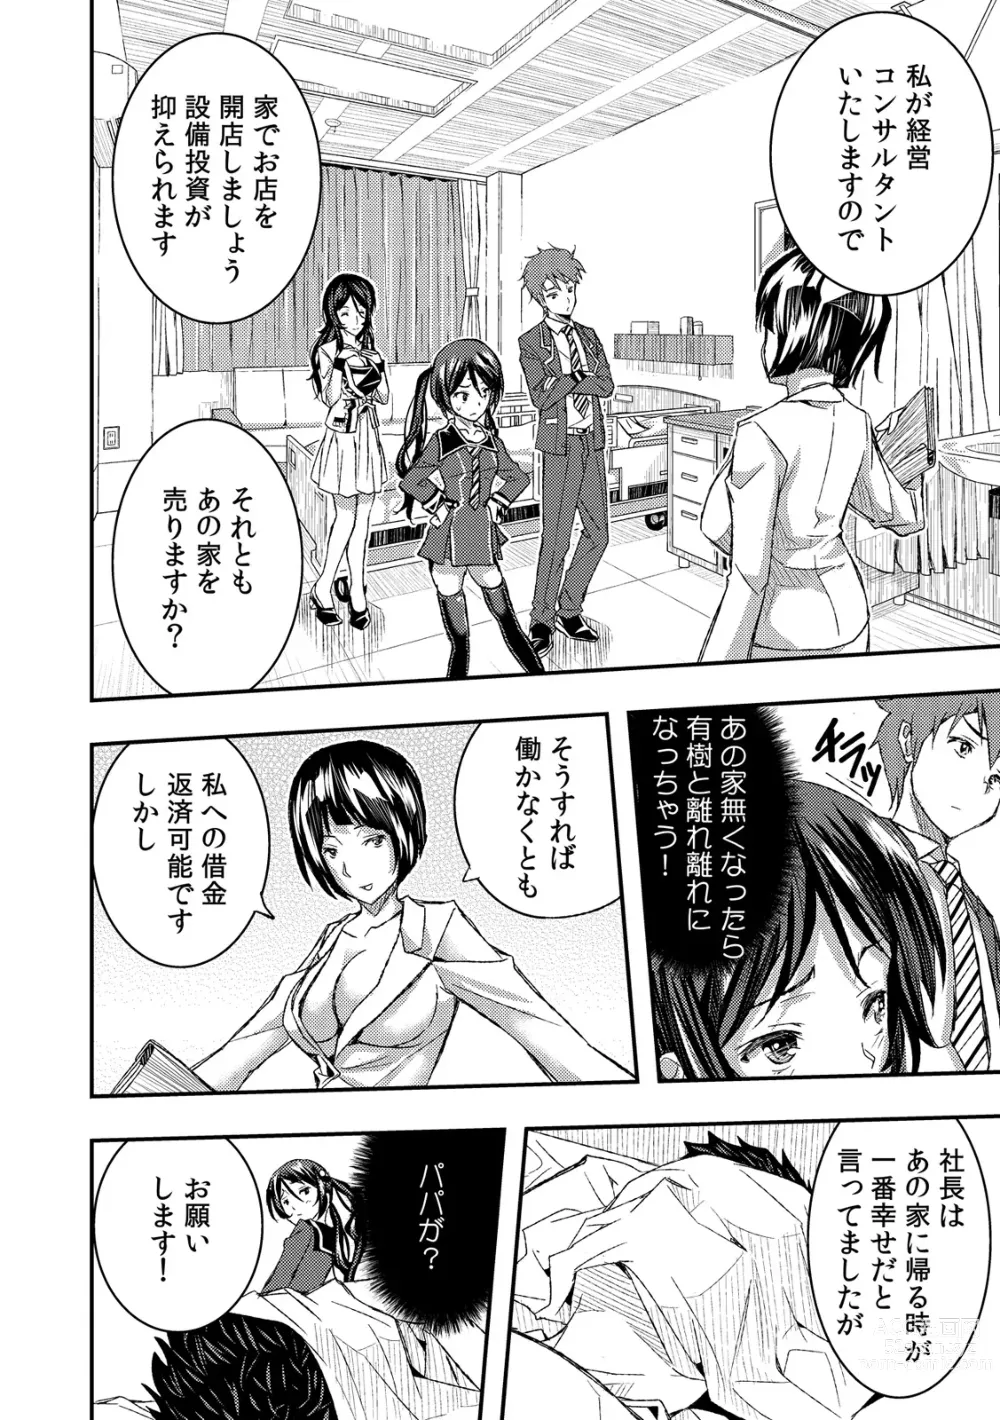 Page 42 of manga Fuuzoku Ittara Osananajimi ga Tsukkomareteita Ken ww 1-2 Full Color